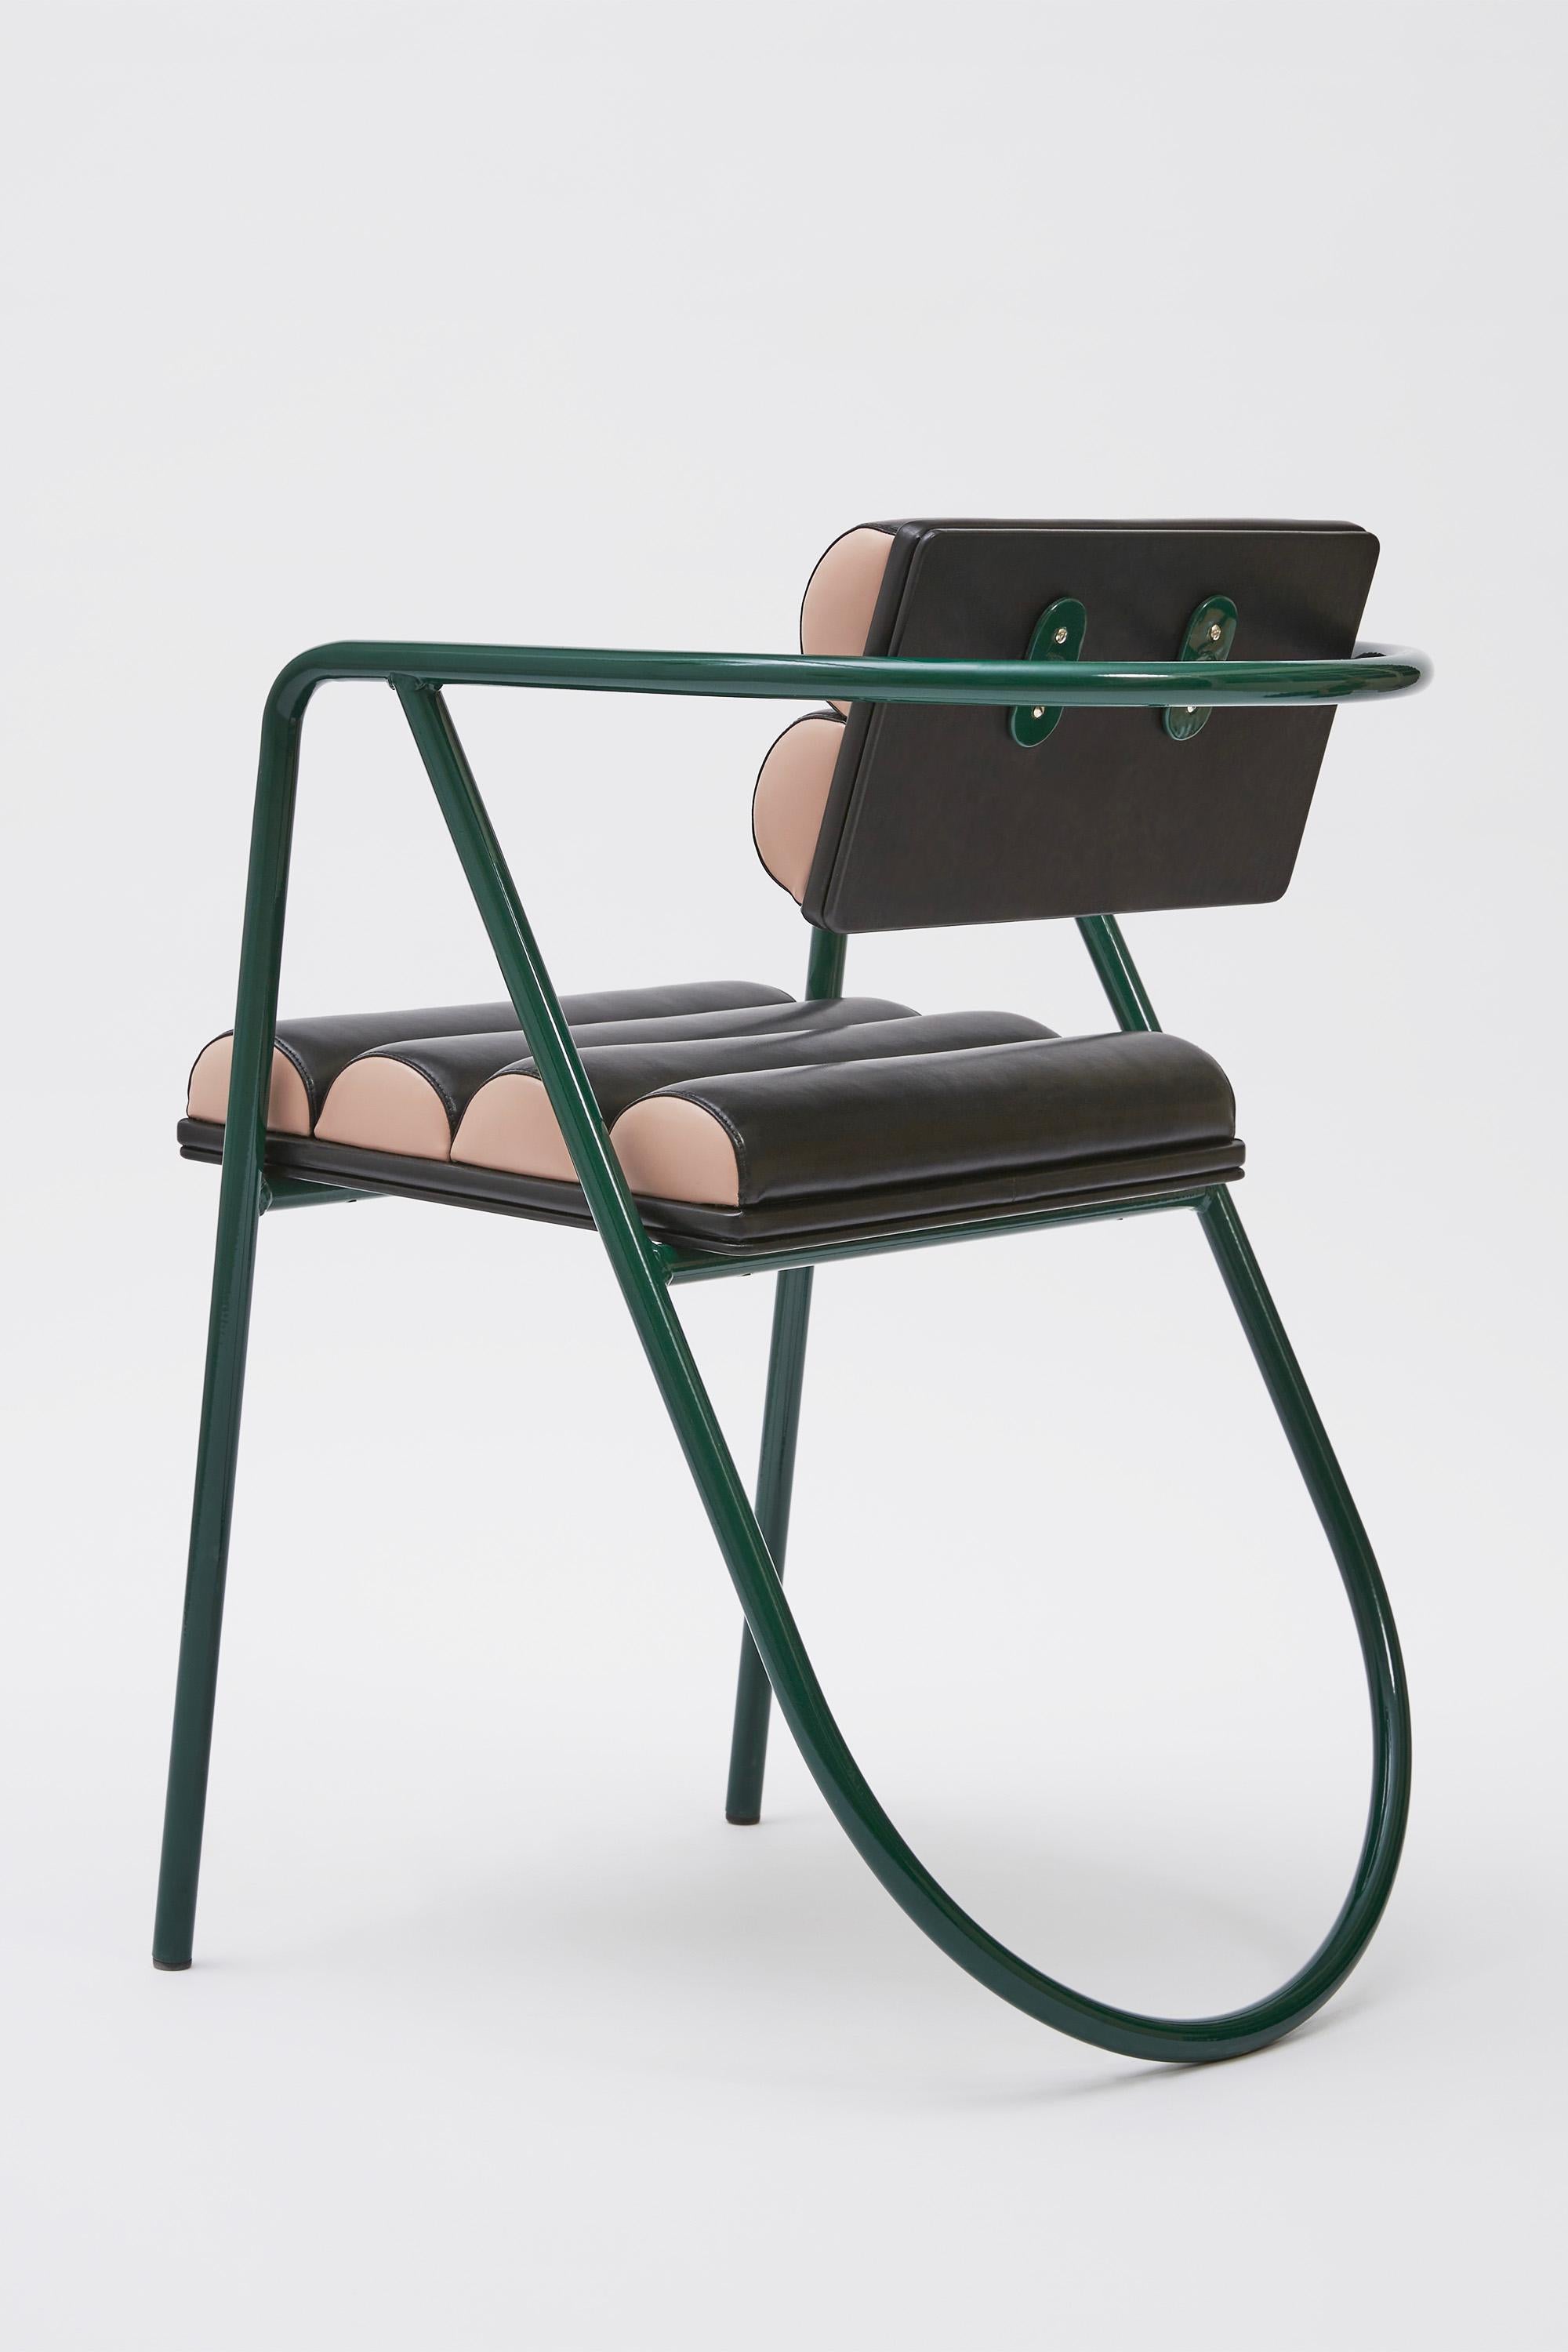 La Misciù Spring Chair In New Condition For Sale In Milano, IT